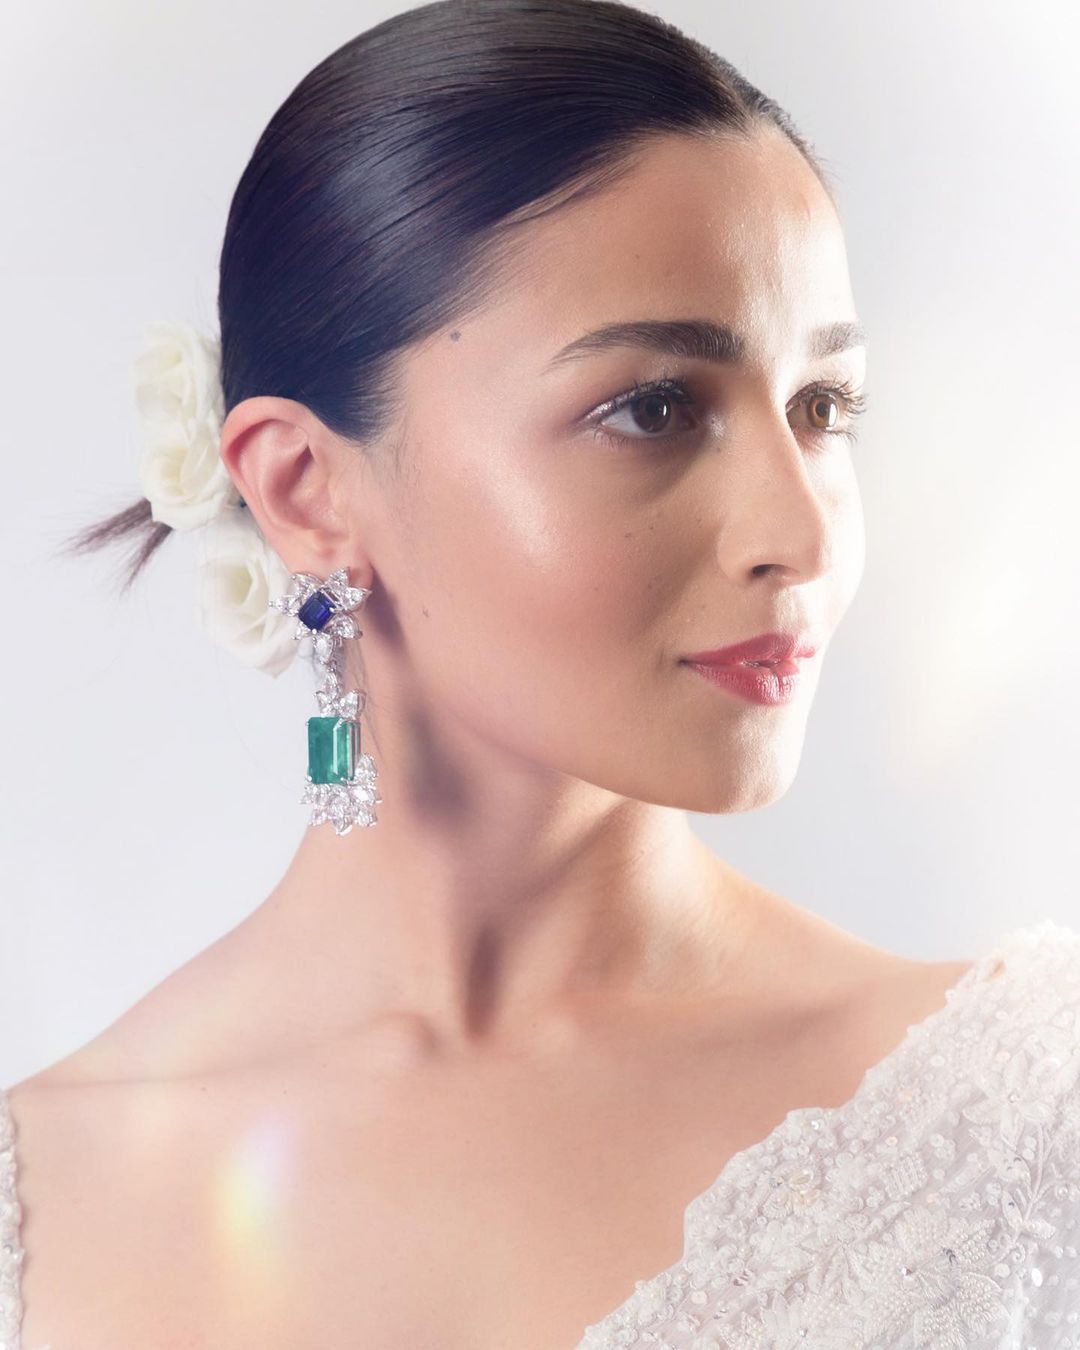 Alia Bhatt accessorised her look with diamond earrings and fresh white roses